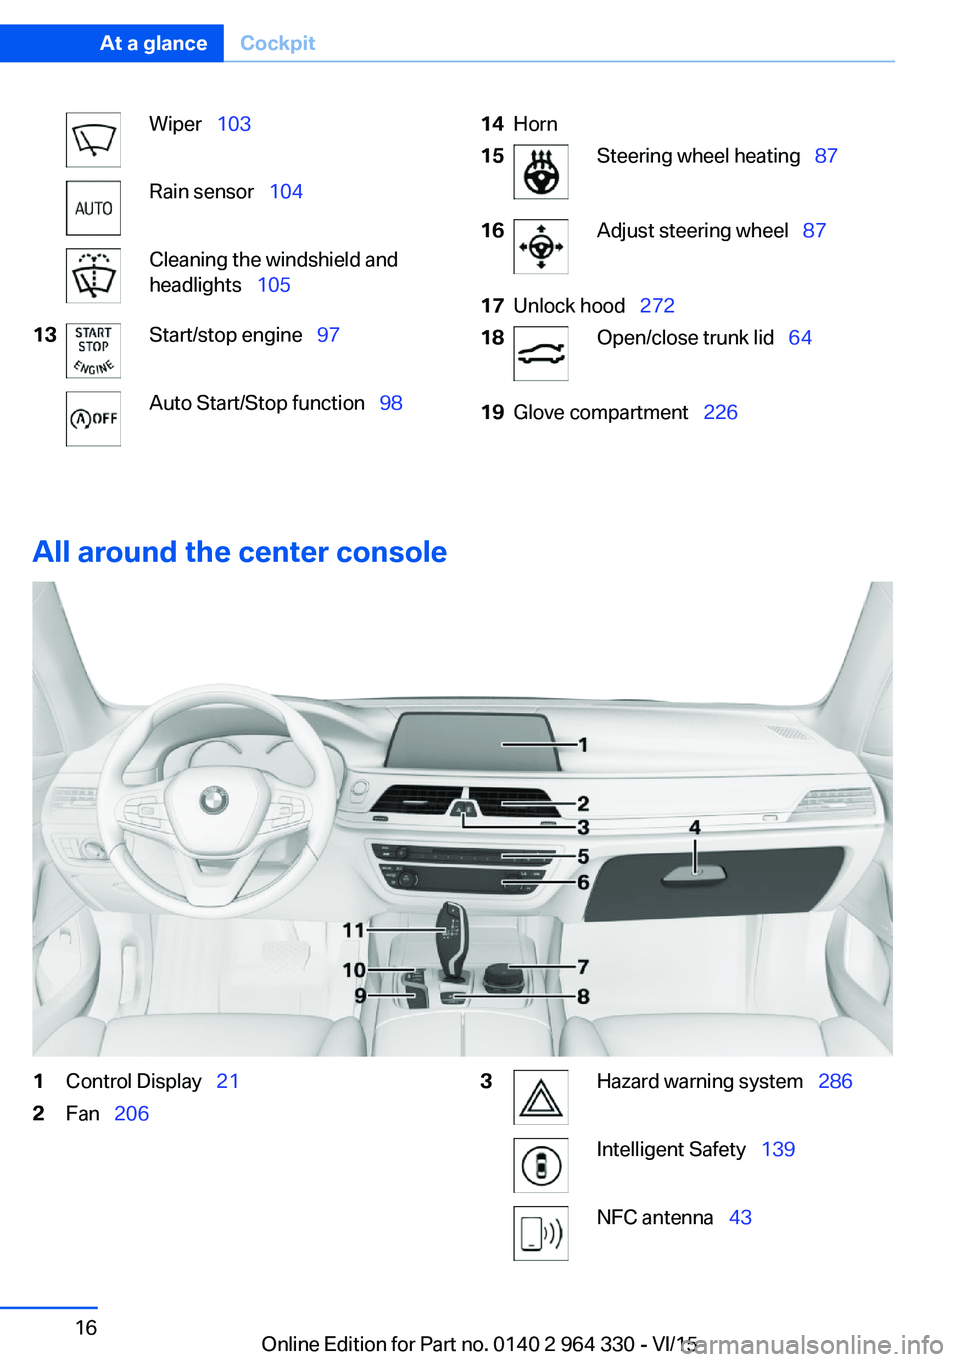 BMW 760LI SEDAN 2015  Owners Manual Wiper  103Rain sensor   104Cleaning the windshield and
headlights   10513Start/stop engine   97Auto Start/Stop function   9814Horn15Steering wheel heating  8716Adjust steering 